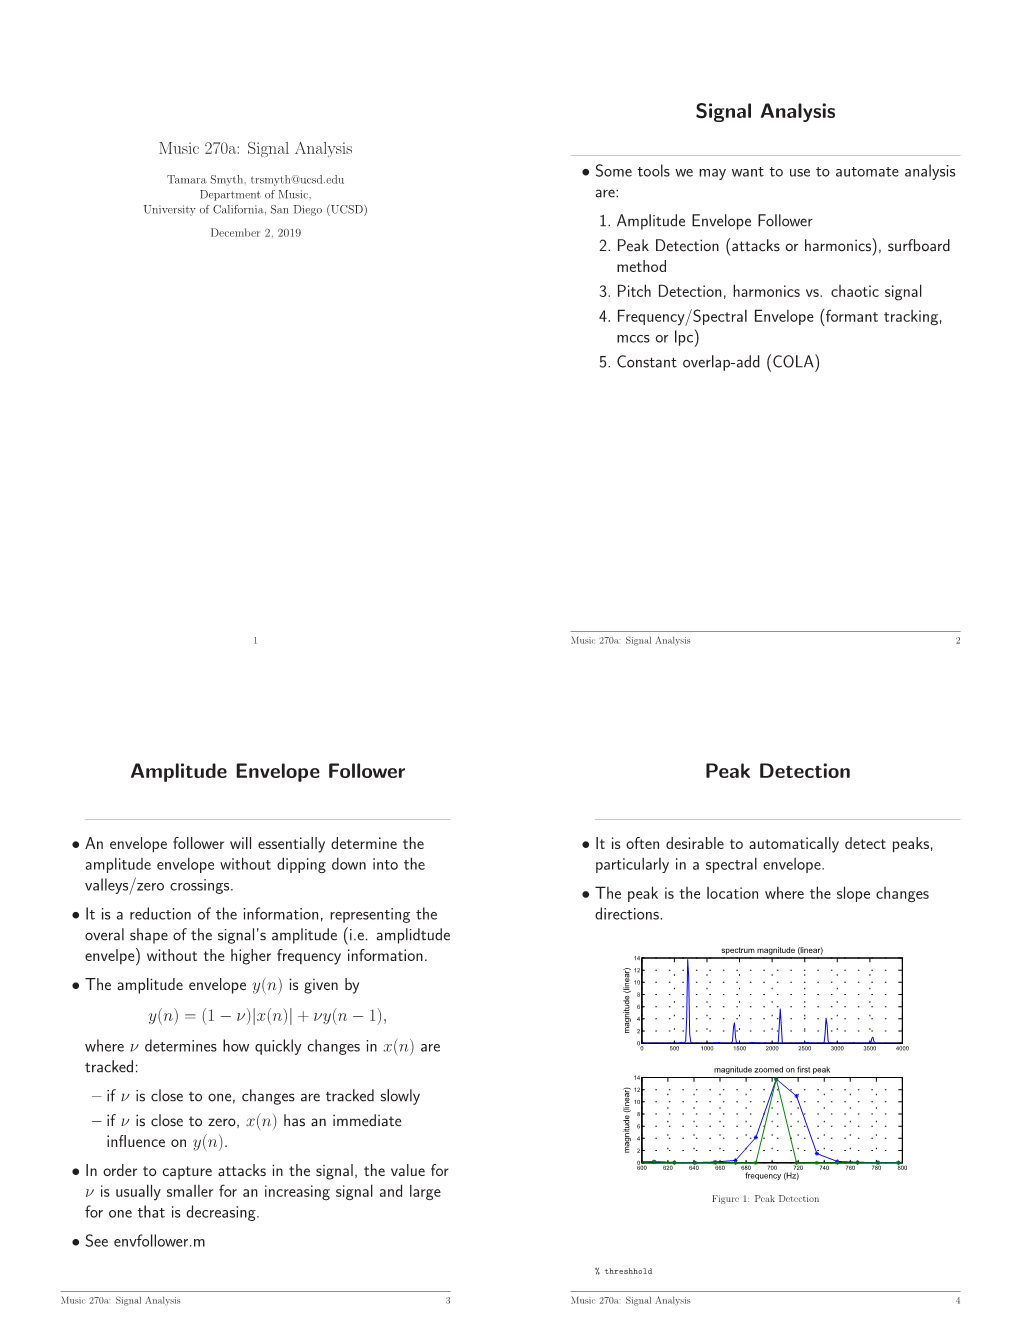 Signal Analysis Amplitude Envelope Follower Peak Detection